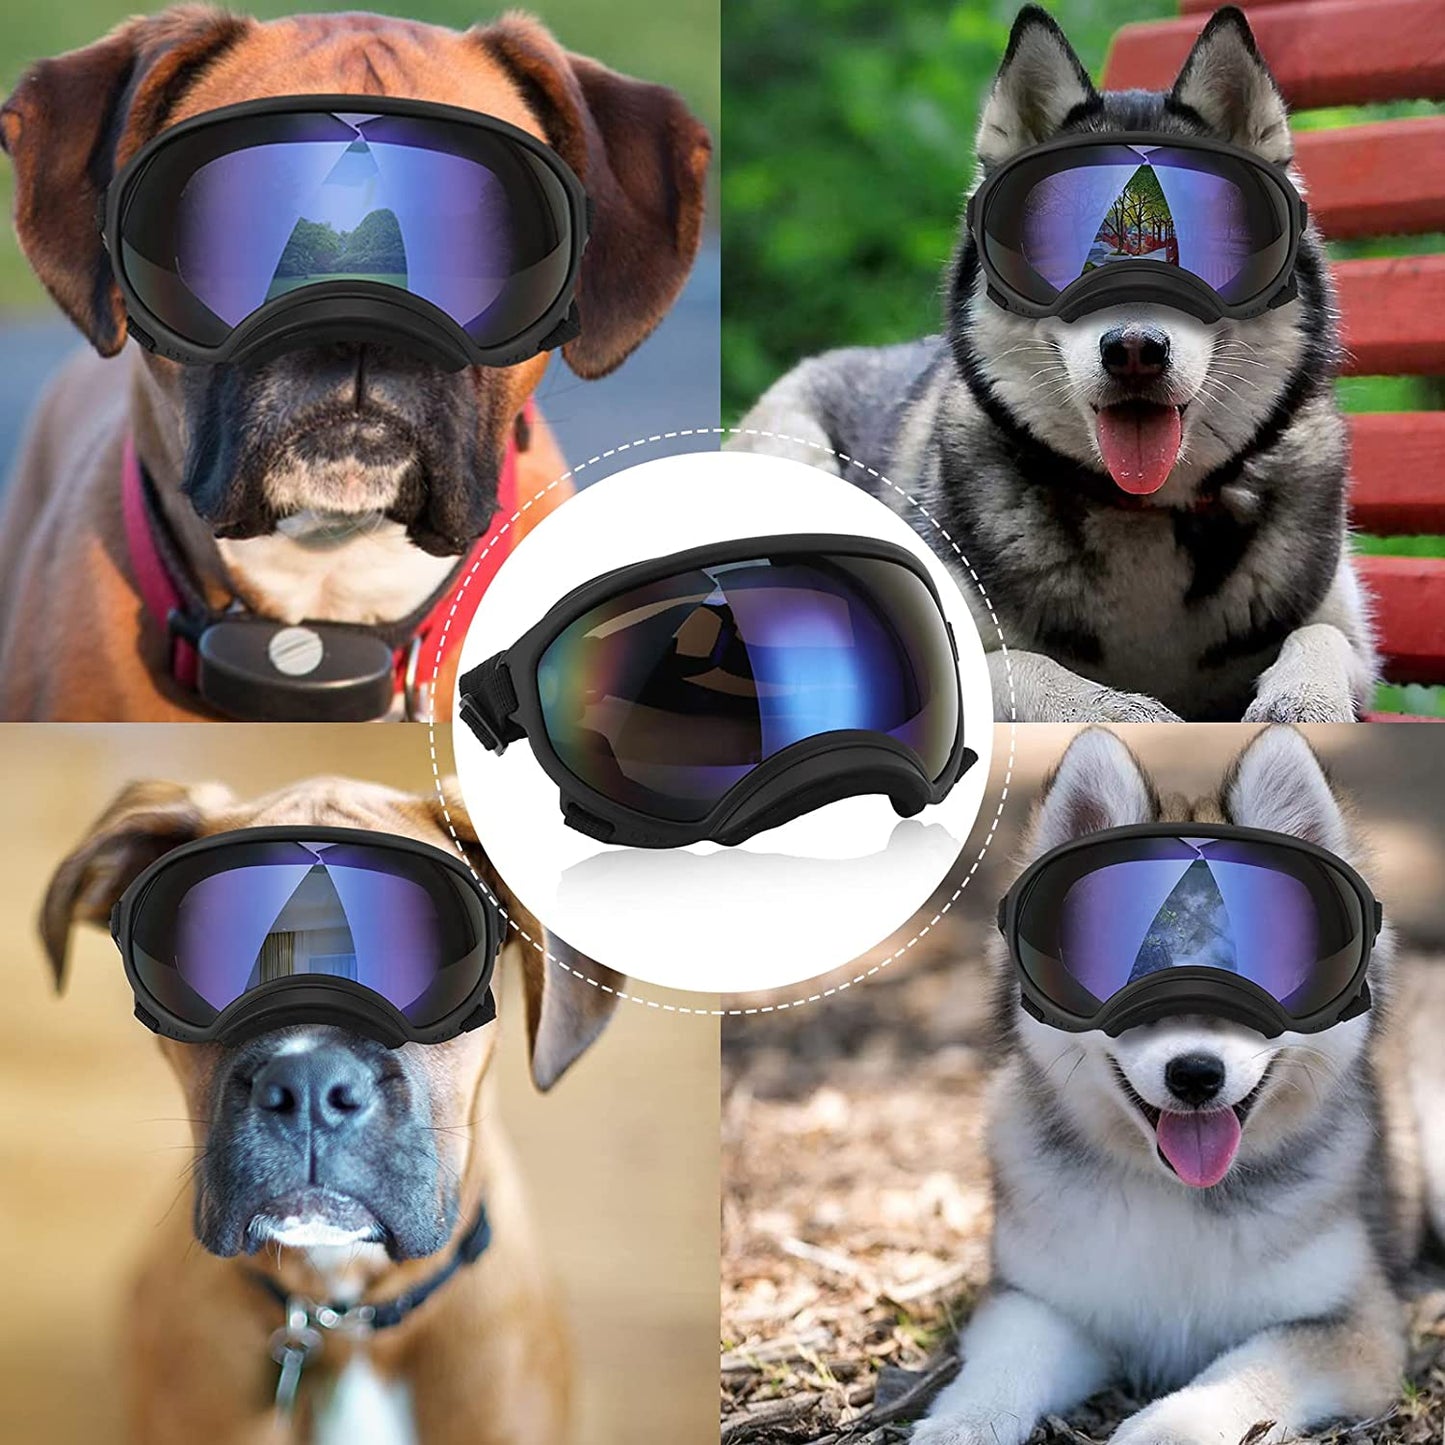 Teamsky Dog Sunglasses Dog Goggles, UV Protection Wind Protection Dust Protection Pet Glasses Eye Wear Protection with Adjustable Strap, for Dog